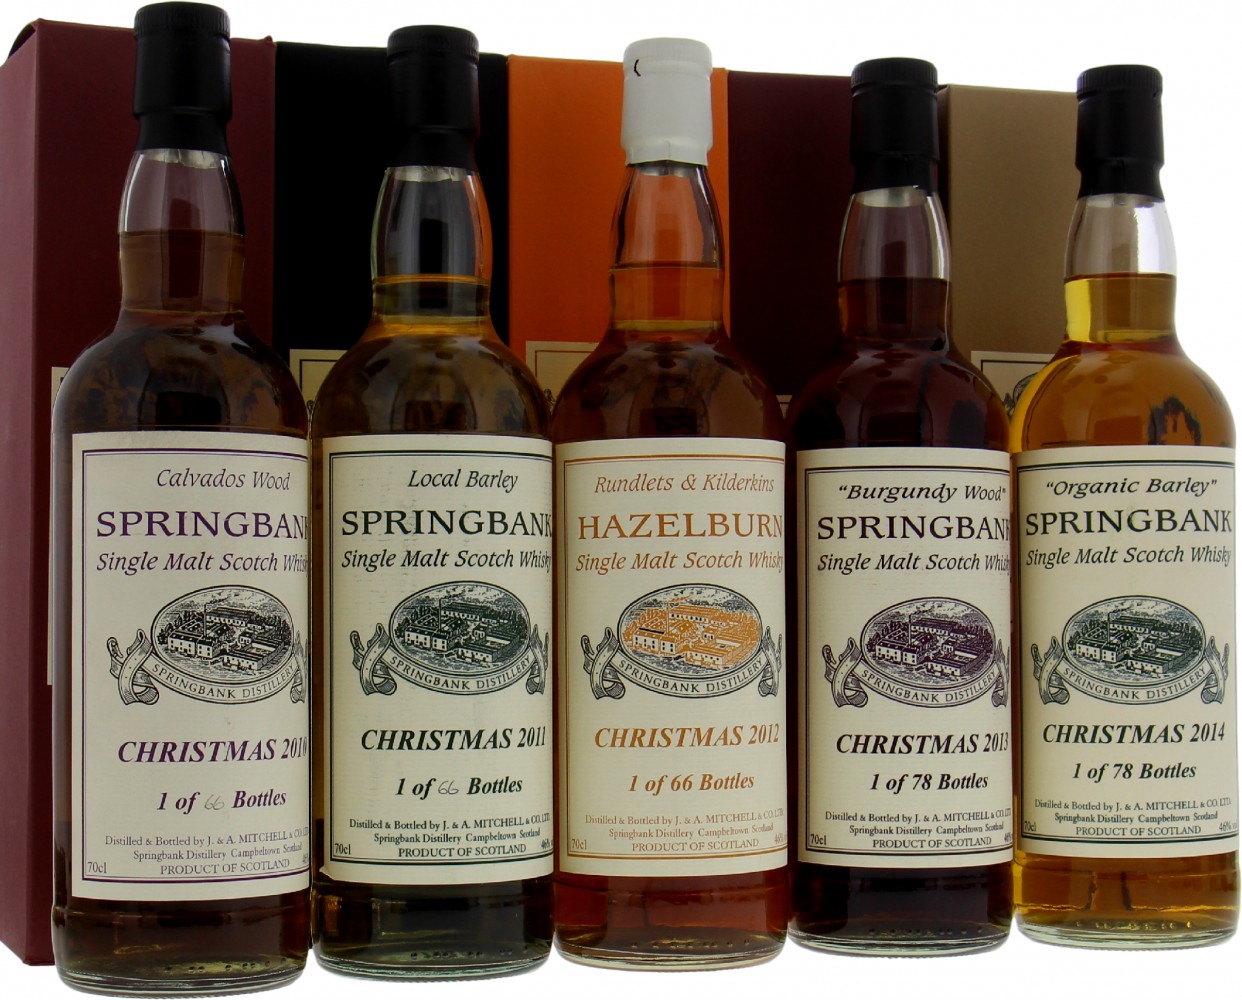 Springbank - Christmas Set of 5 bottles Editions:2010, 2011, 2012, 2013 & 2014 NV